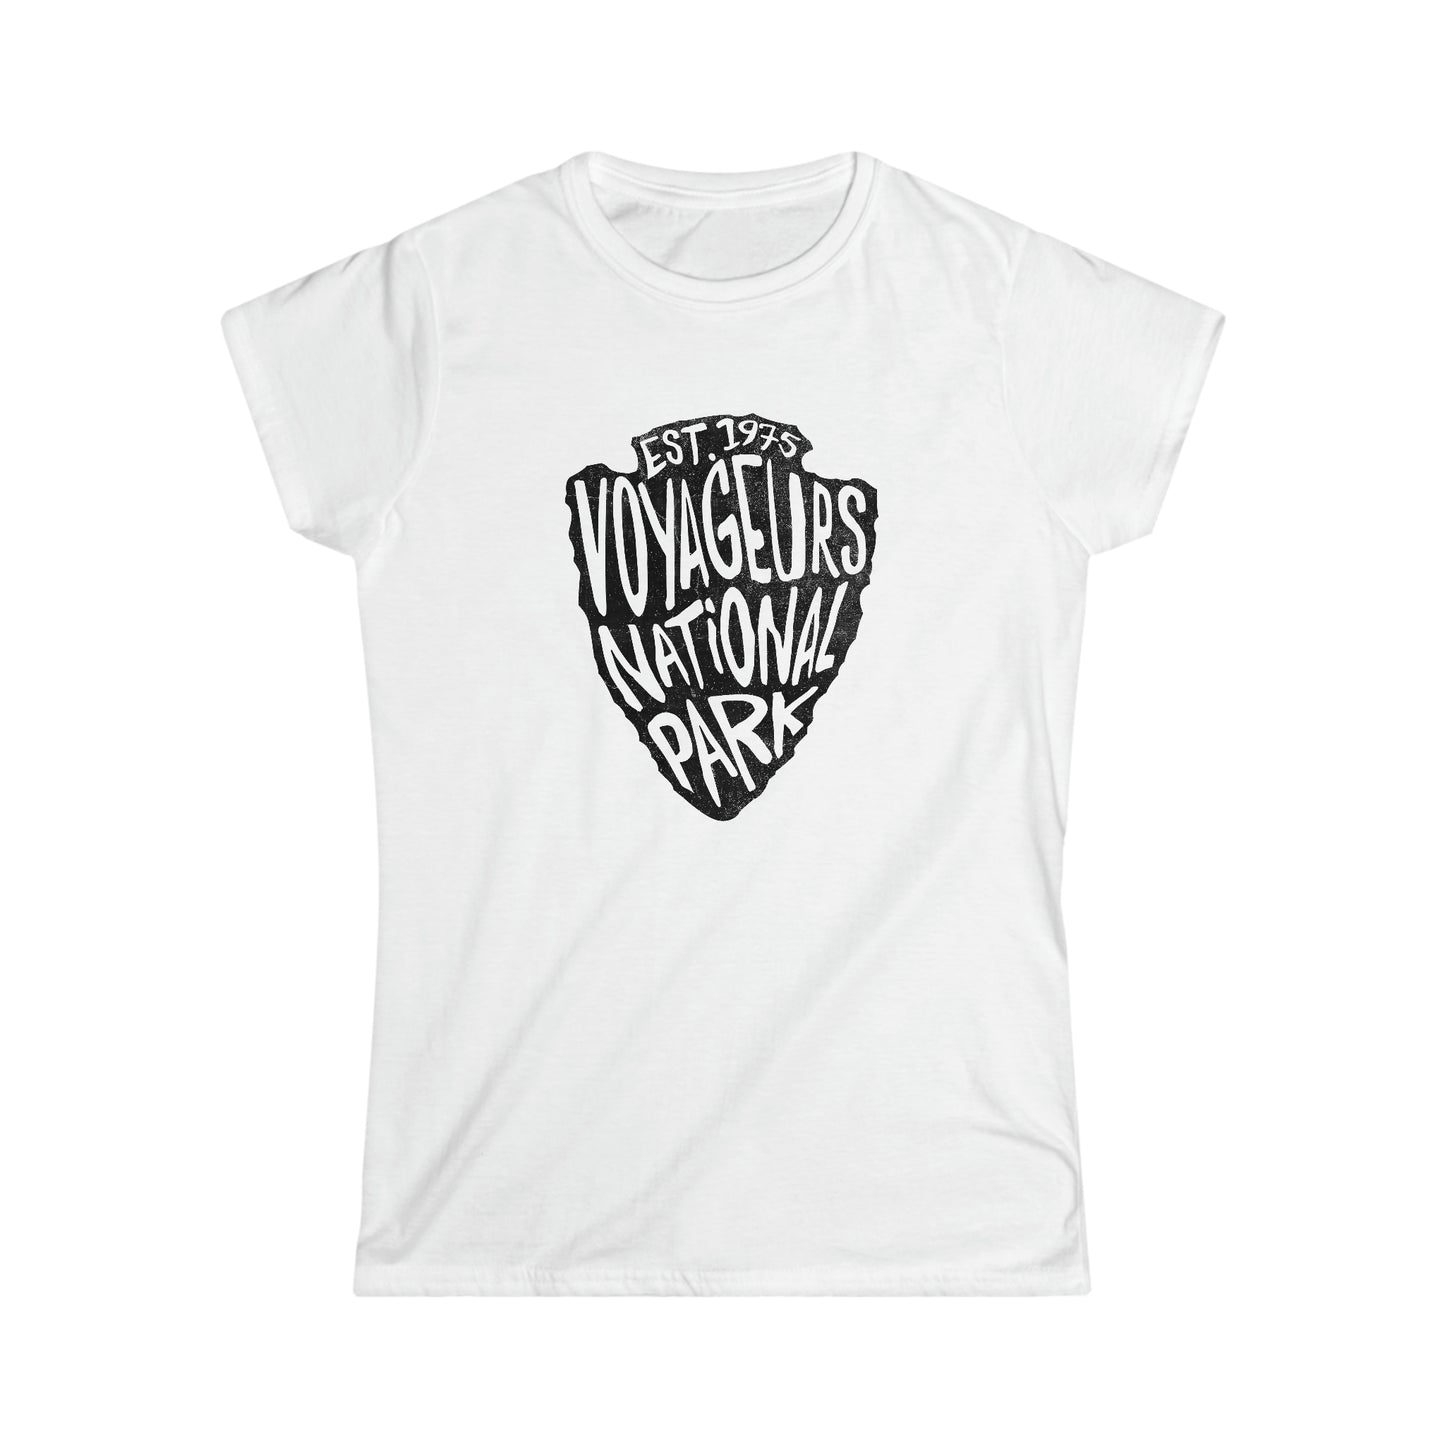 Voyageurs National Park Women's T-Shirt - Arrowhead Design